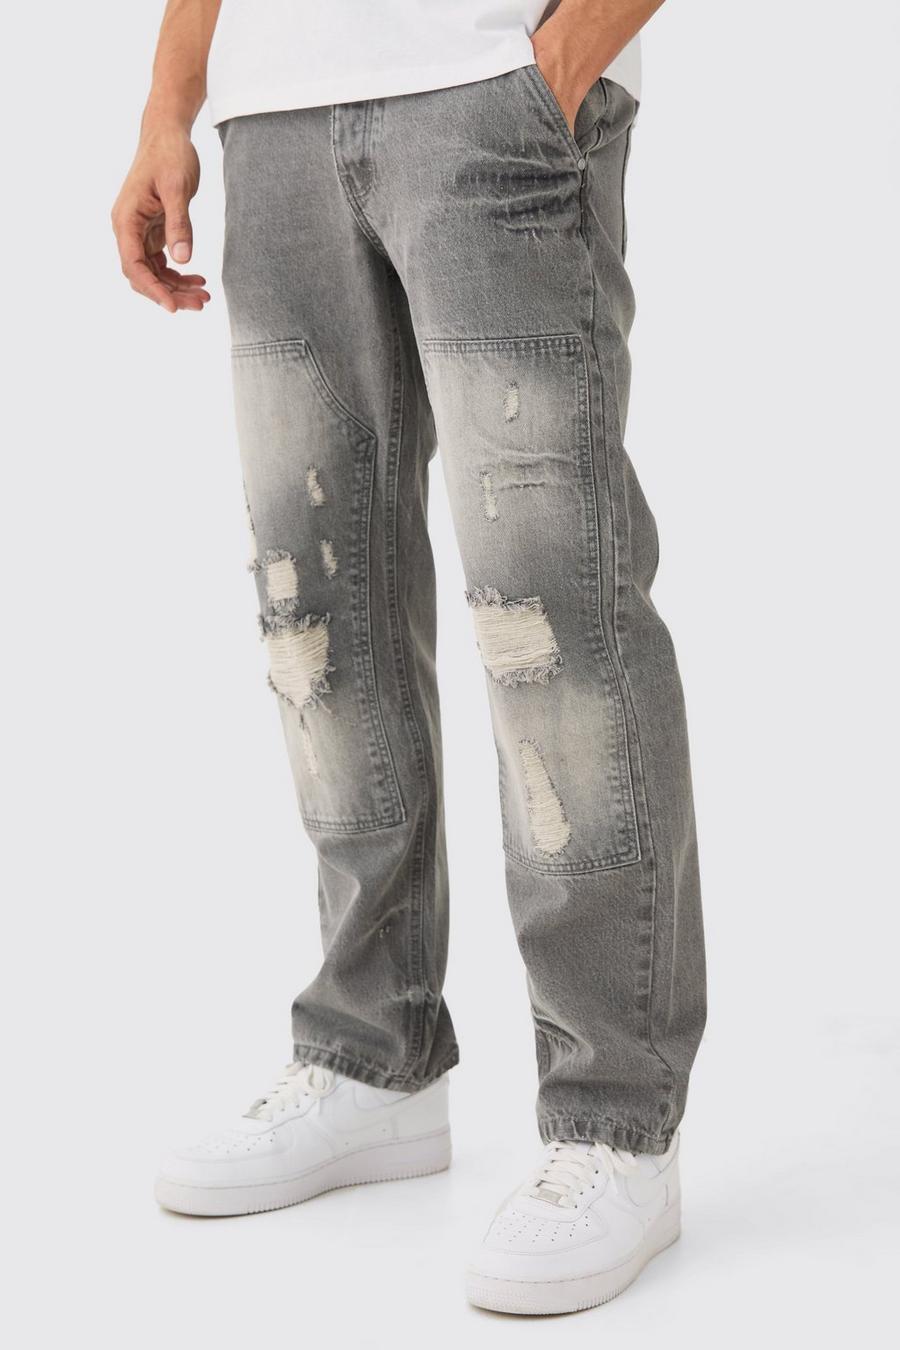 Lockere zerrissene Jeans in Mittelgrau, Mid grey